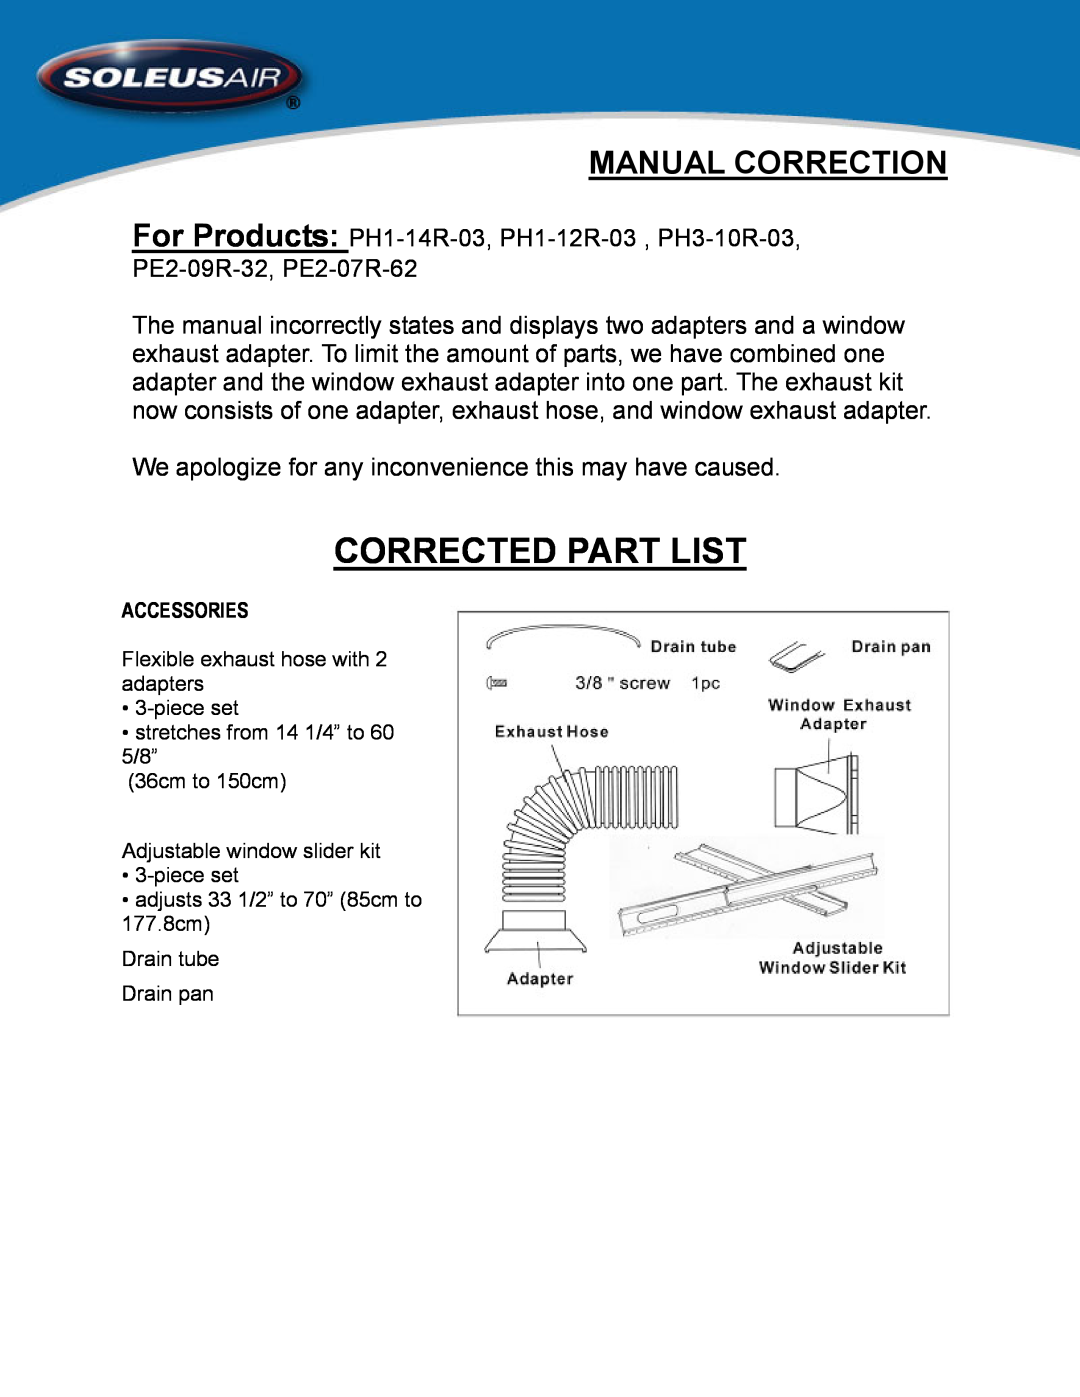 Soleus Air manual Model No. PE2-07R / PE2-09R, PE2-07R-62 / PE2-09R-32, Operating Instructions, 3046364 